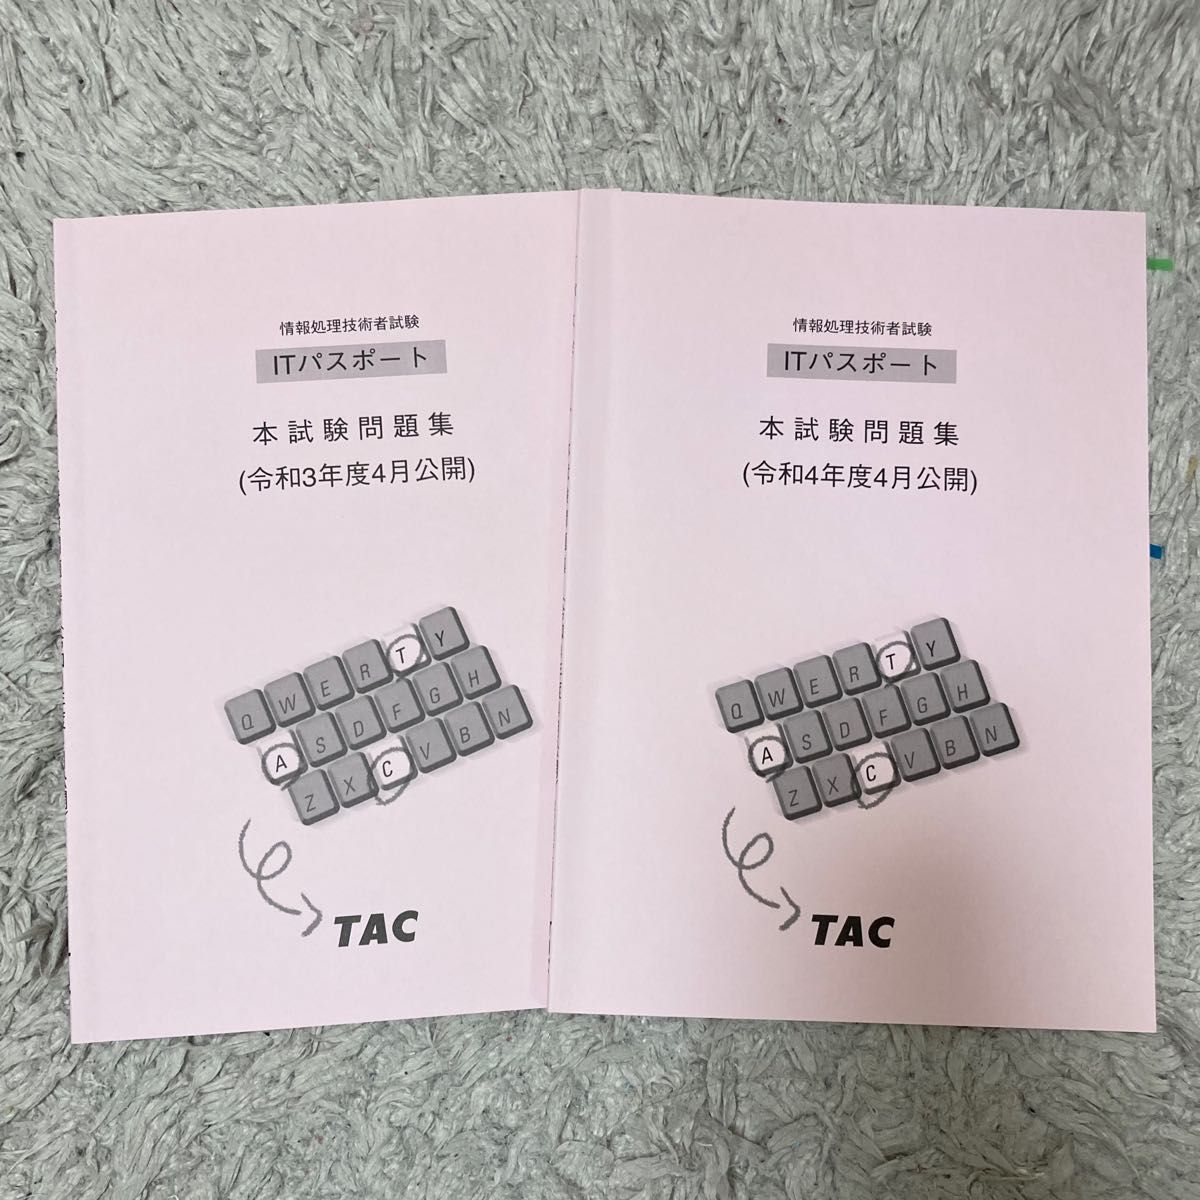 TAC ITパスポート 本試験問題集 2冊セット